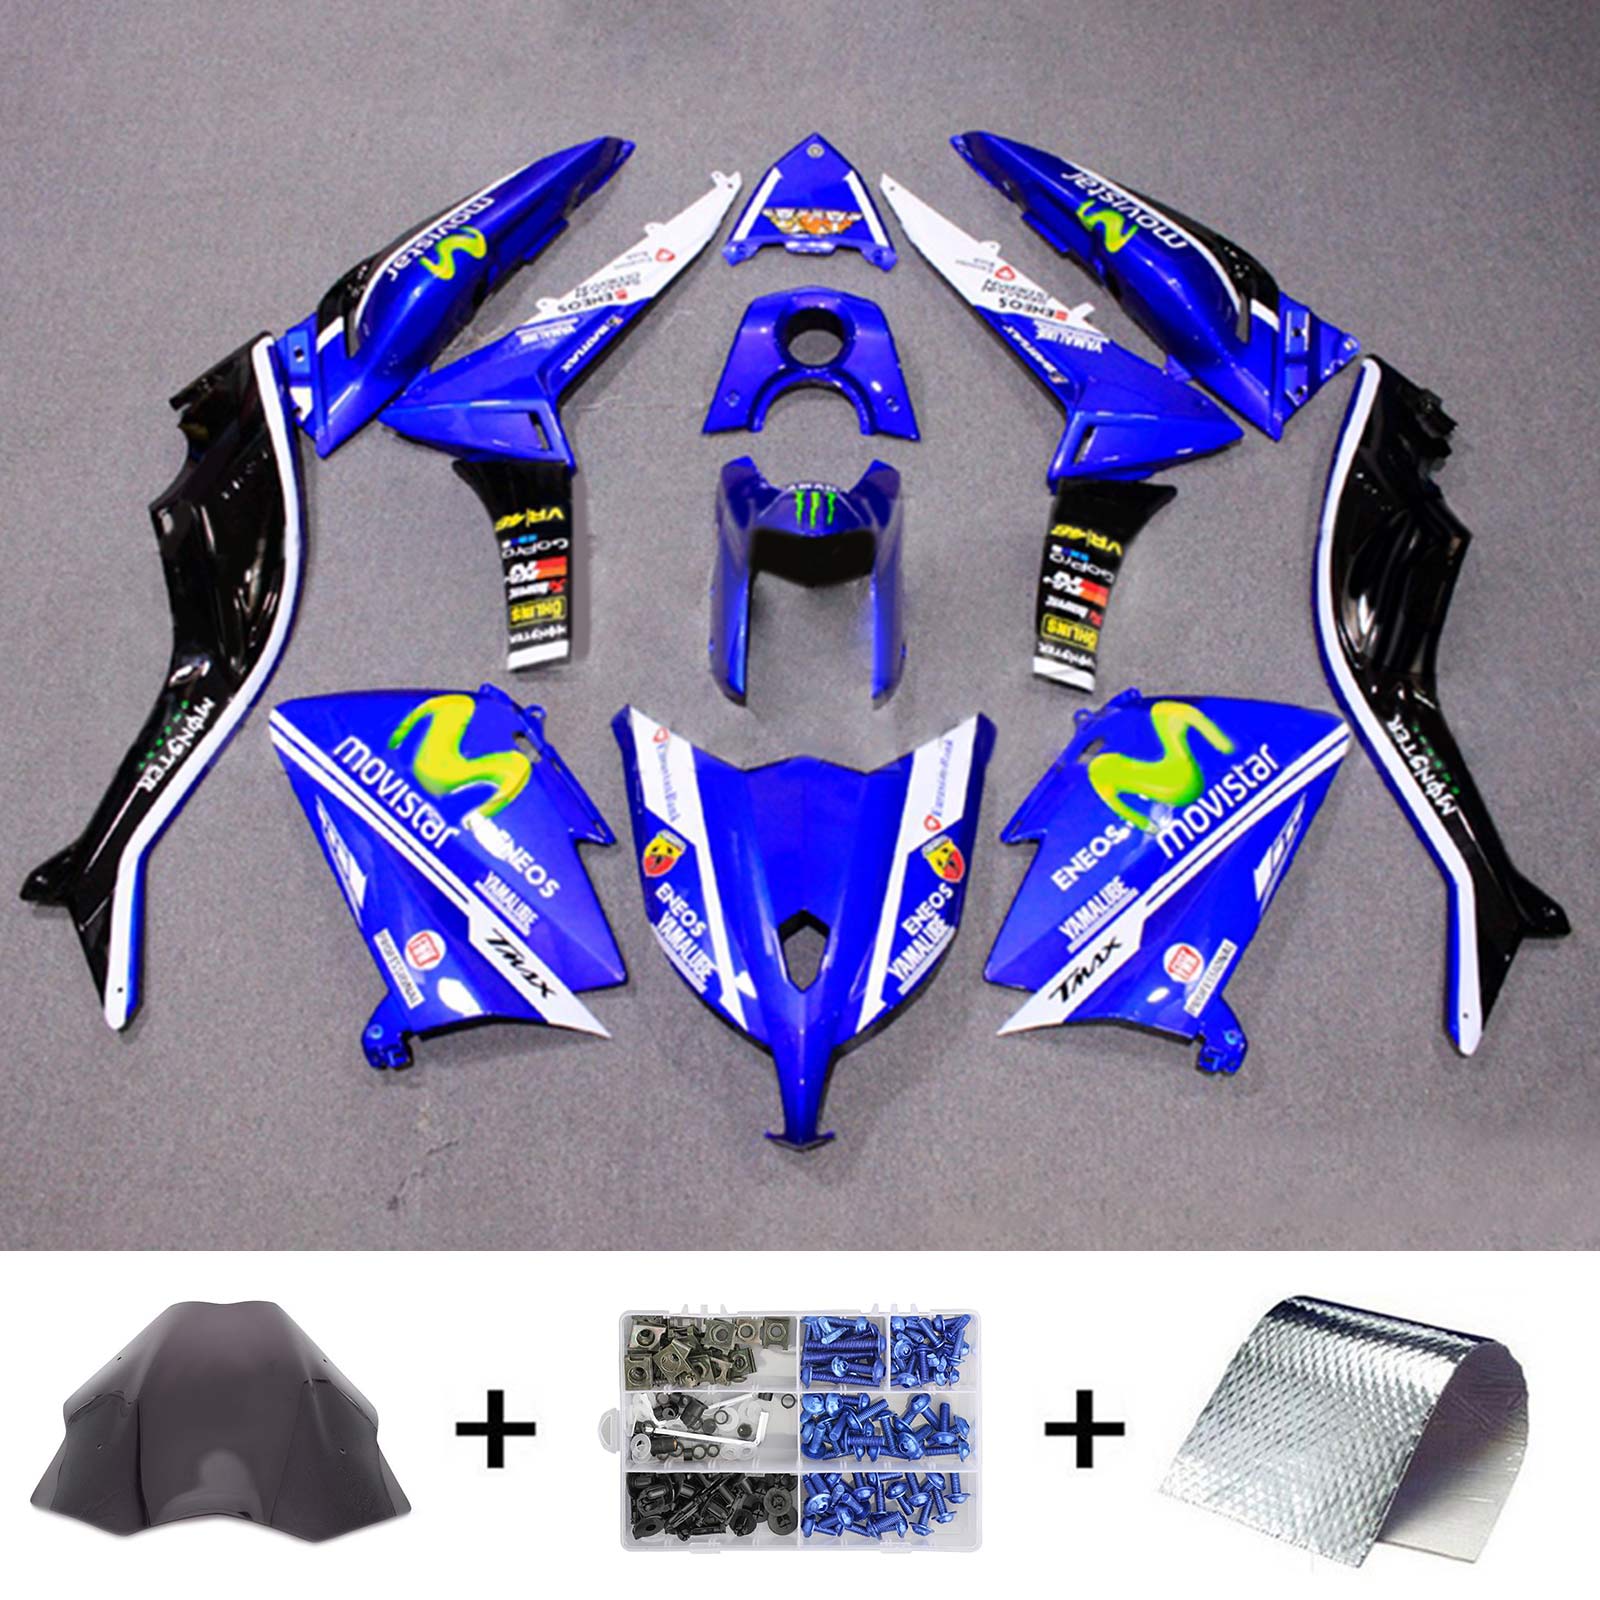 Amotopart 2012-2014 T-Max TMAX530 Yamaha Blue&Yellow Fairing Kit